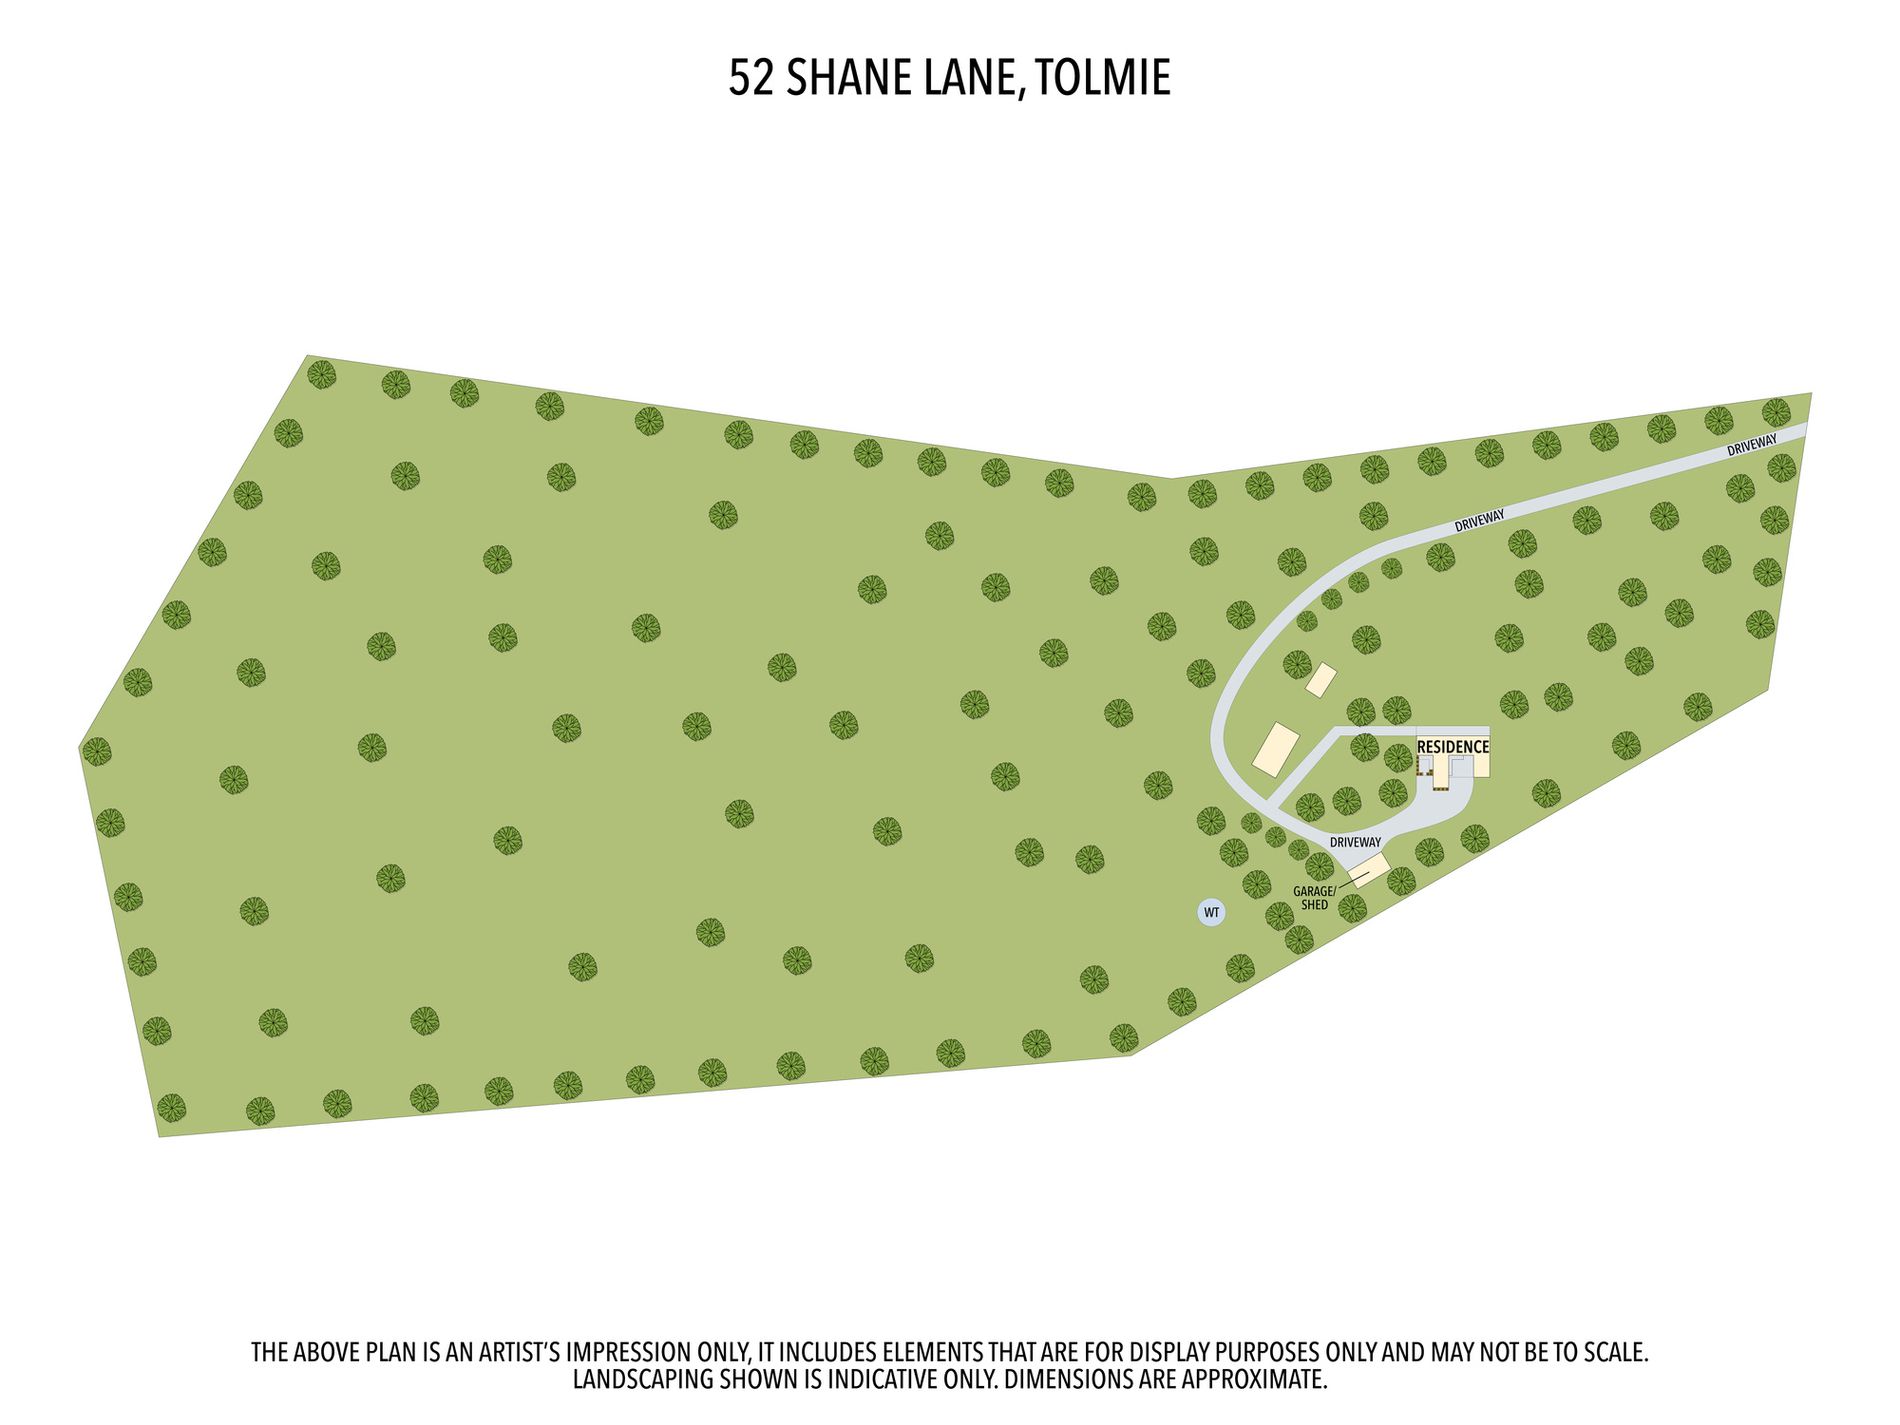 52 Shane Lane, Tolmie